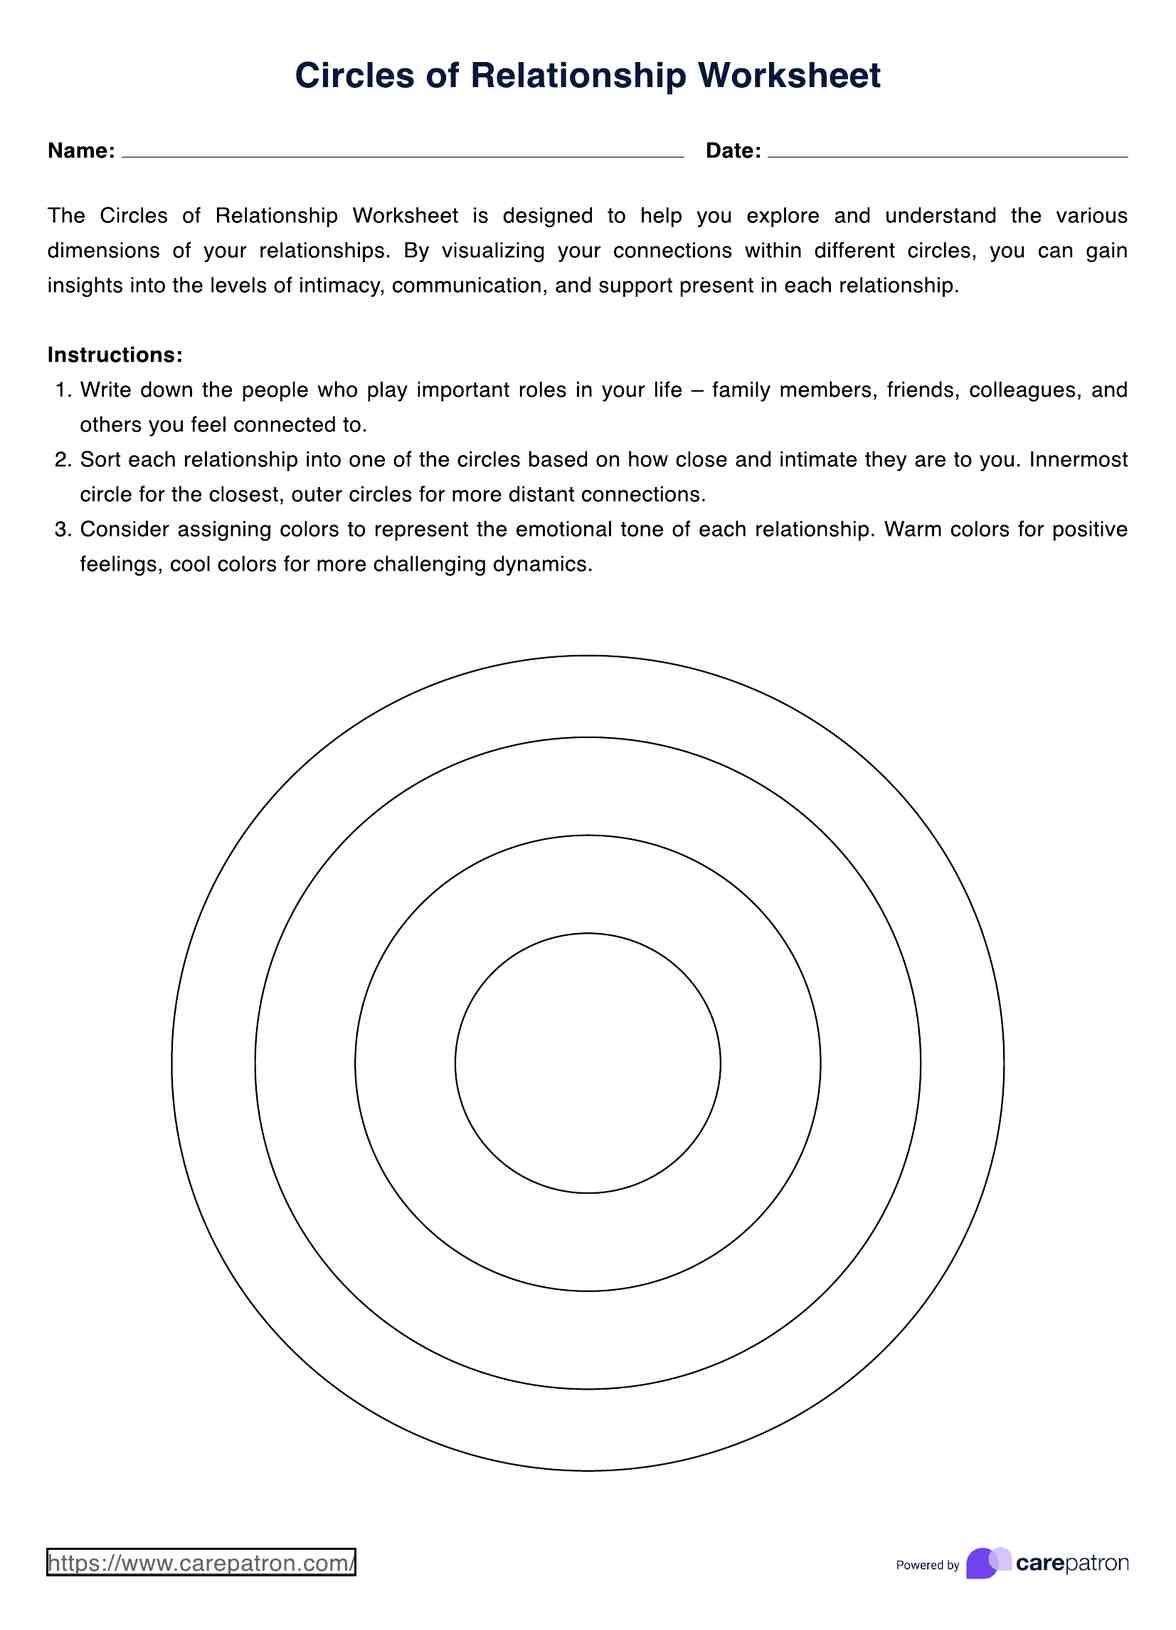 Circles of Relationships Worksheet PDF Example